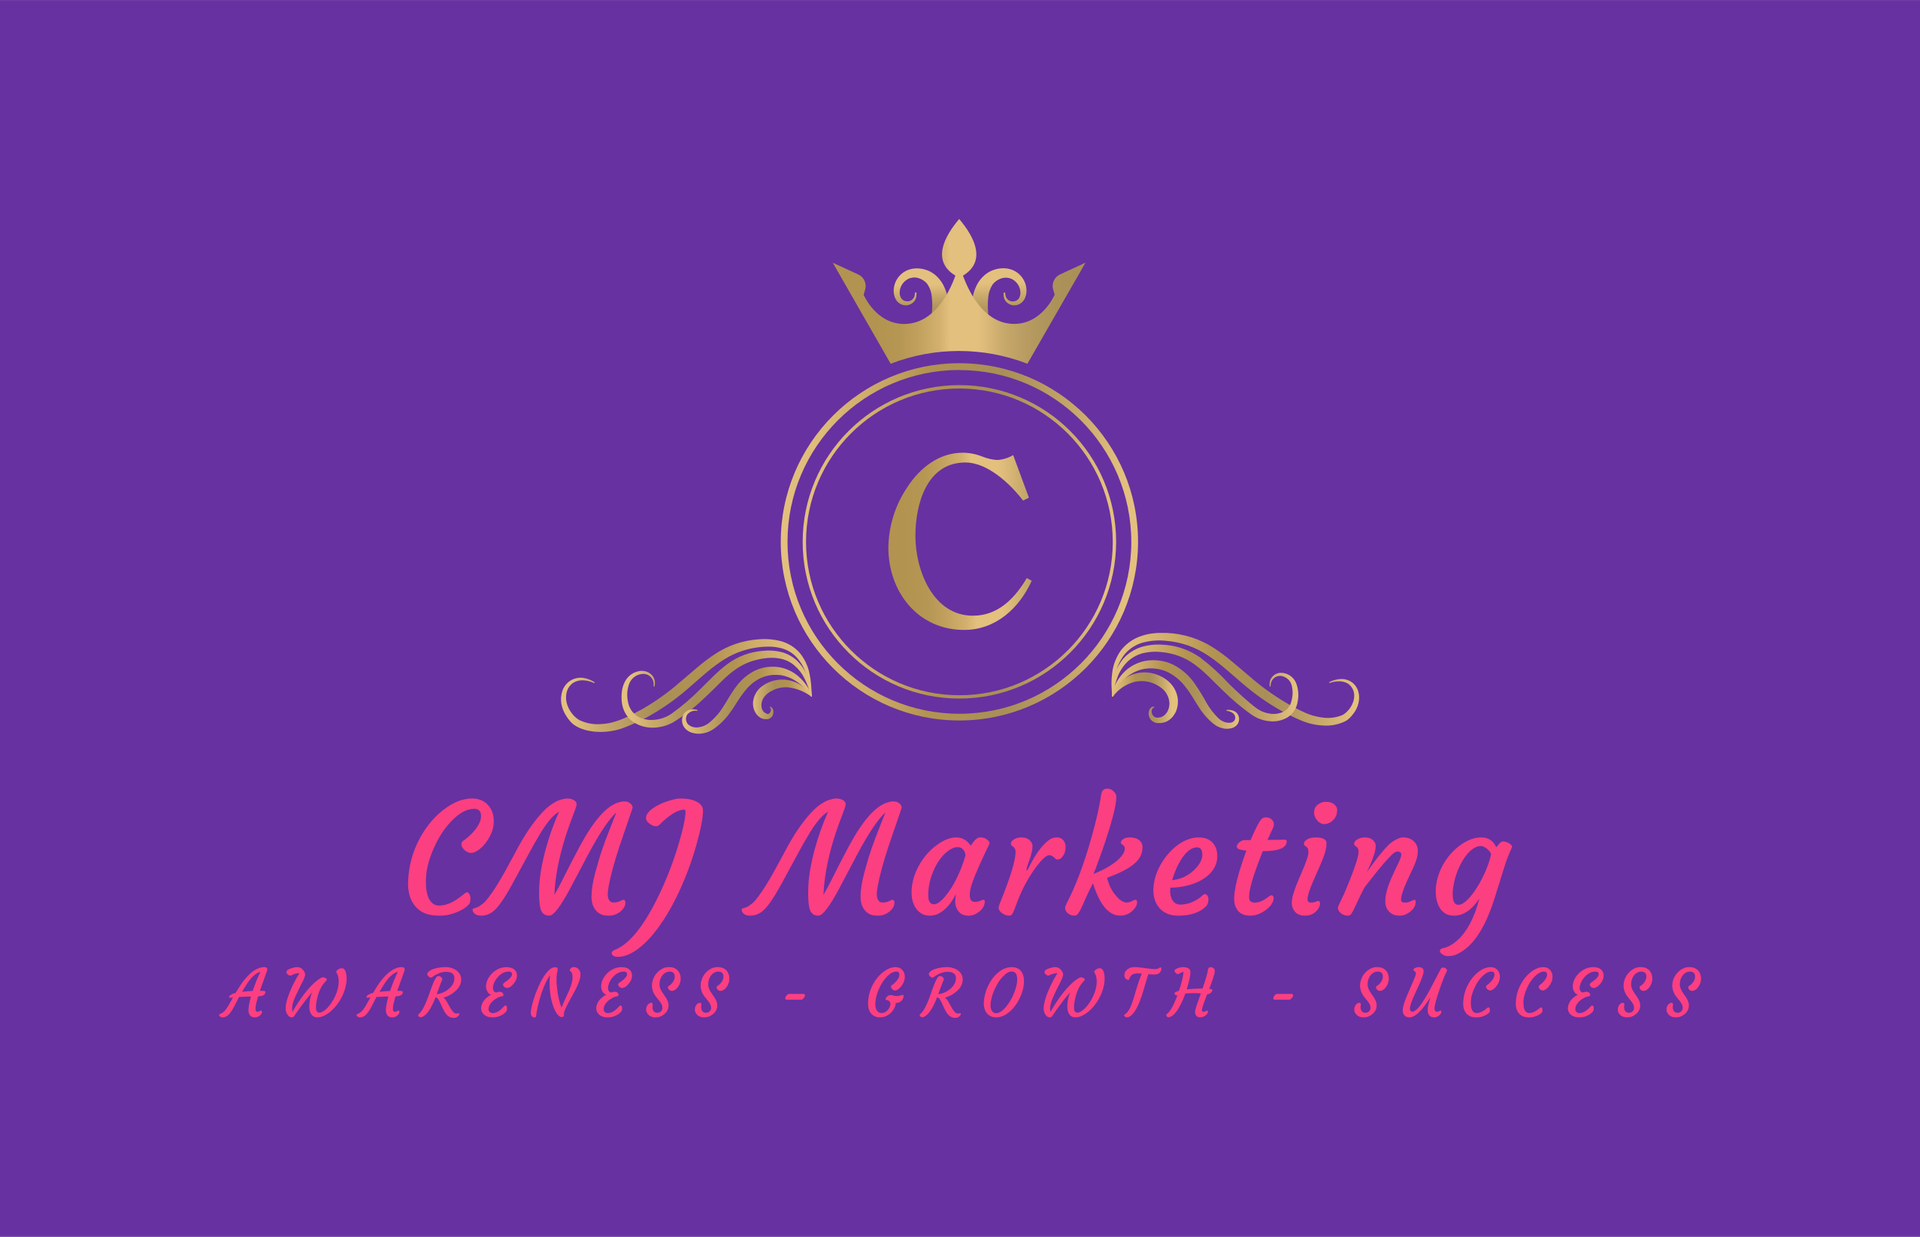 CMJ Marketing